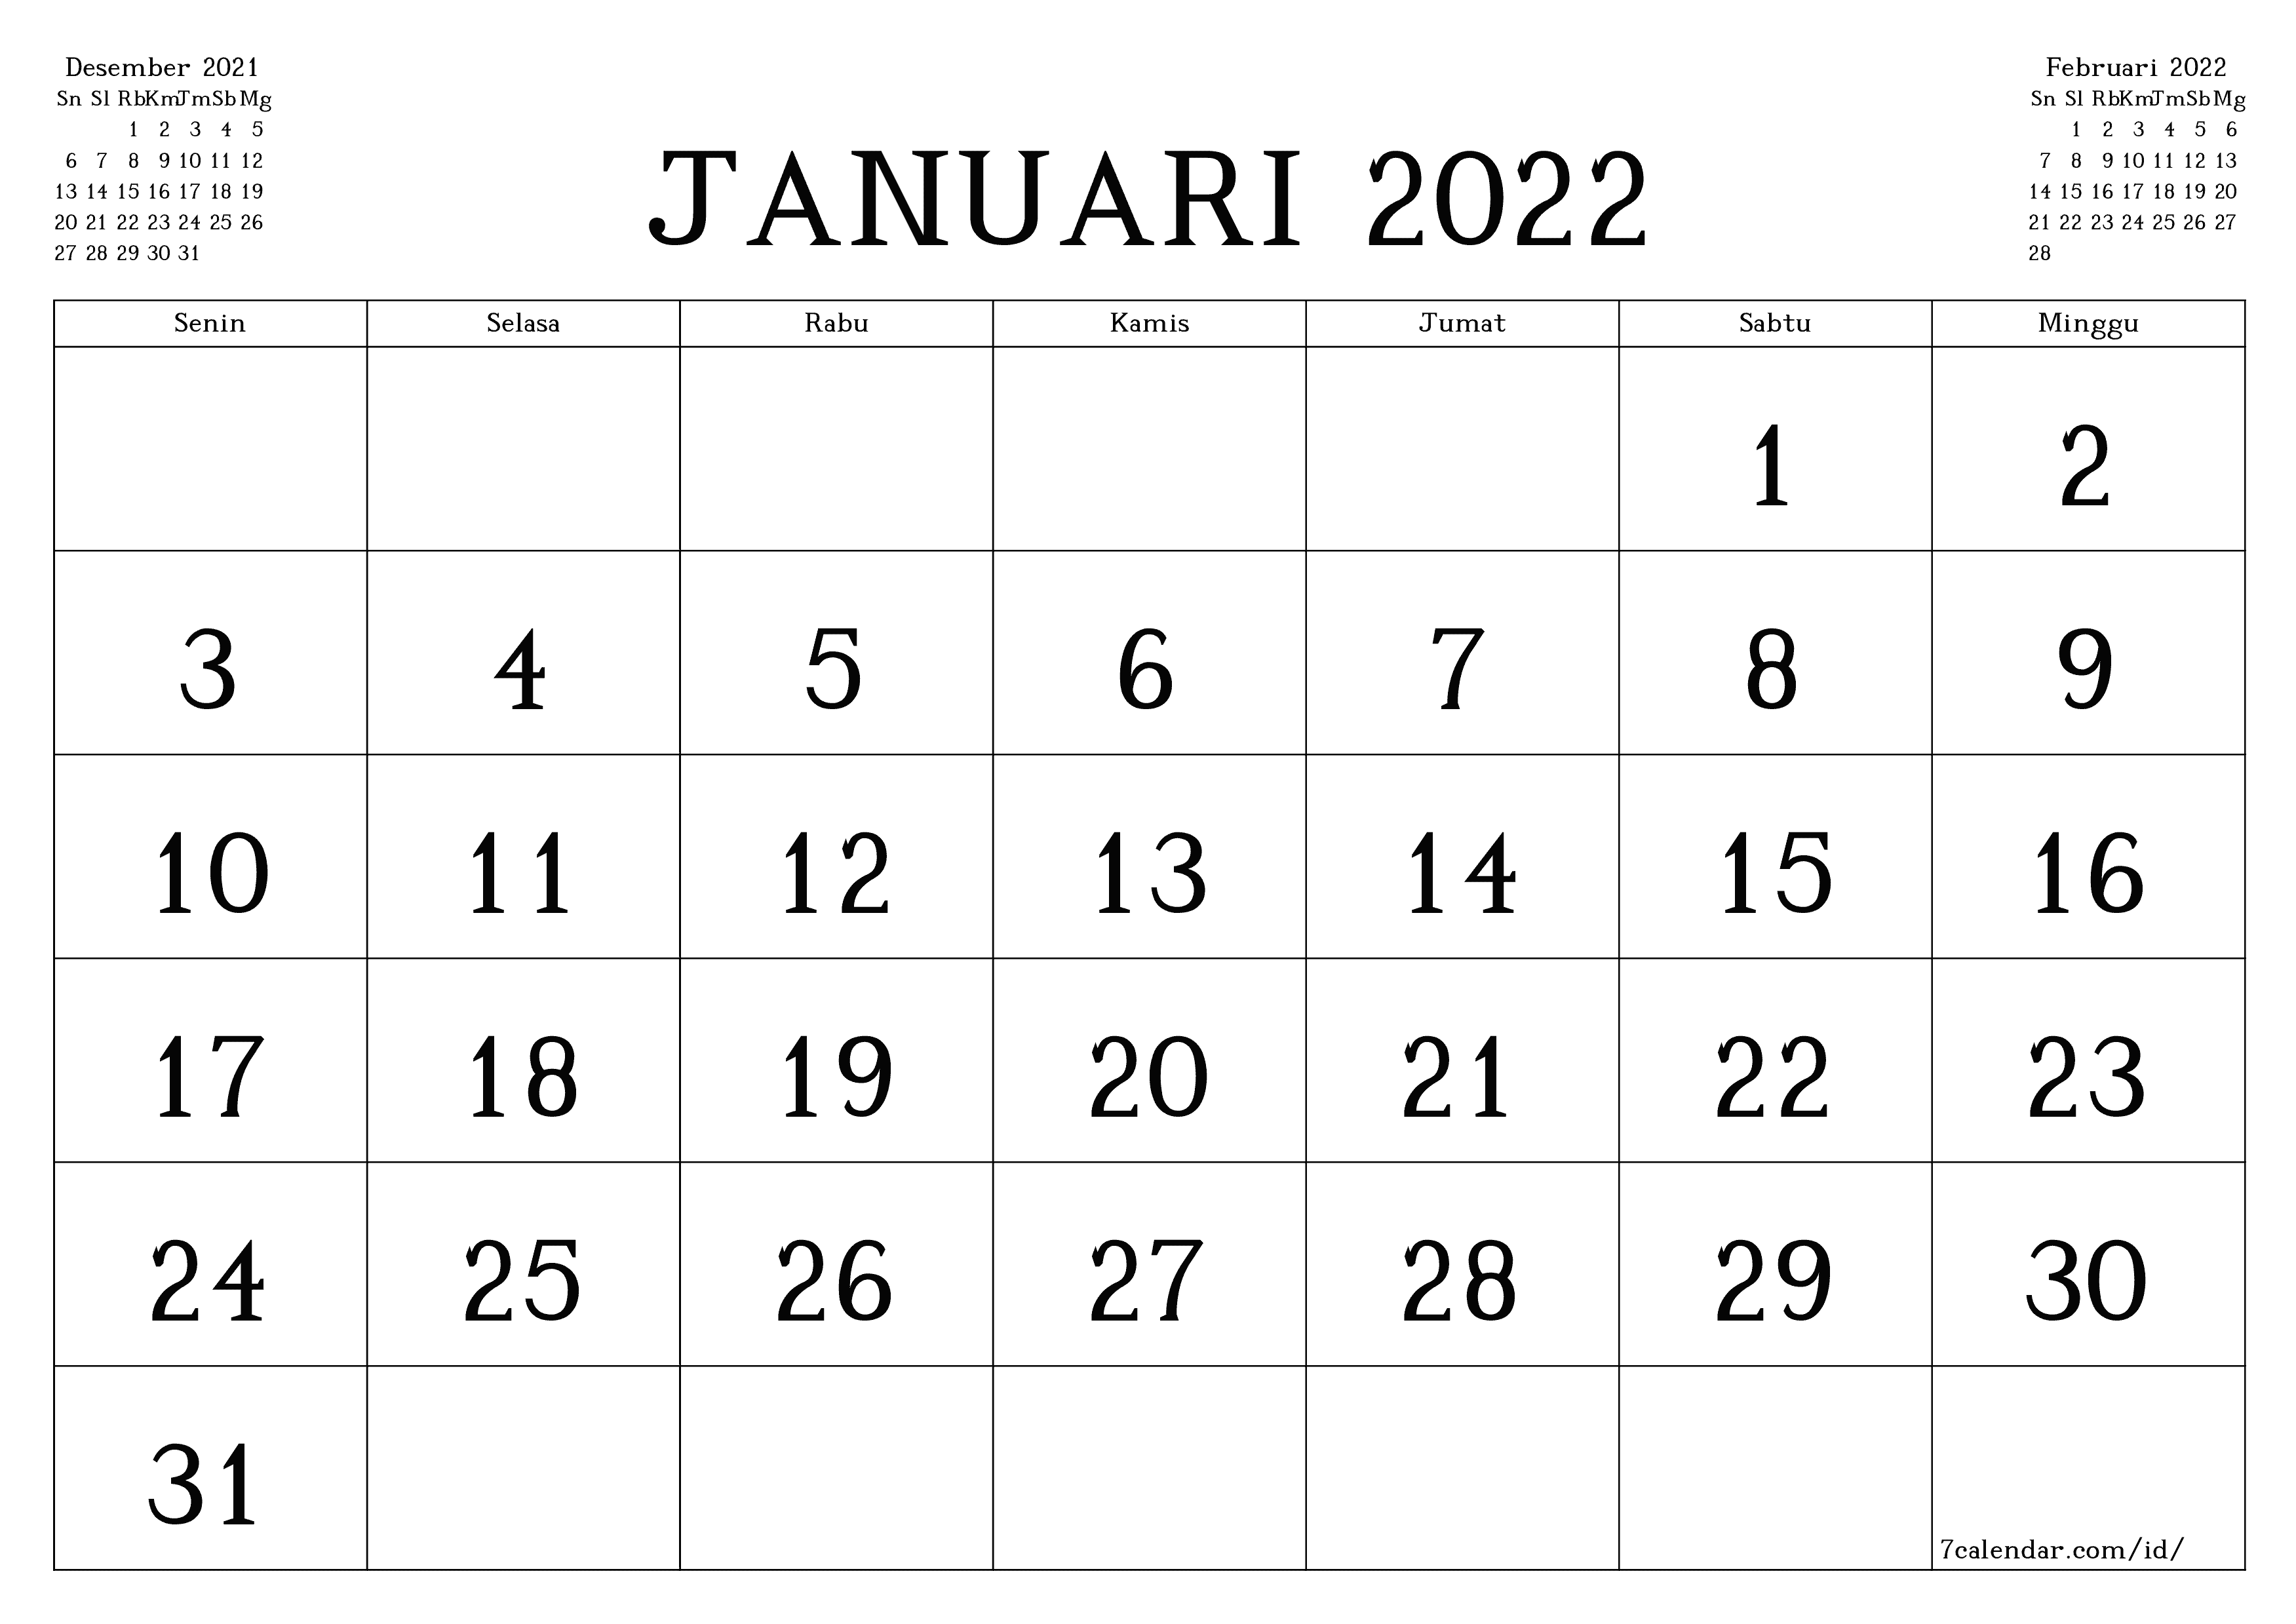 Kosongkan agenda bulanan untuk bulan Januari 2022 dengan catatan, simpan dan cetak ke PDF PNG Indonesian - 7calendar.com